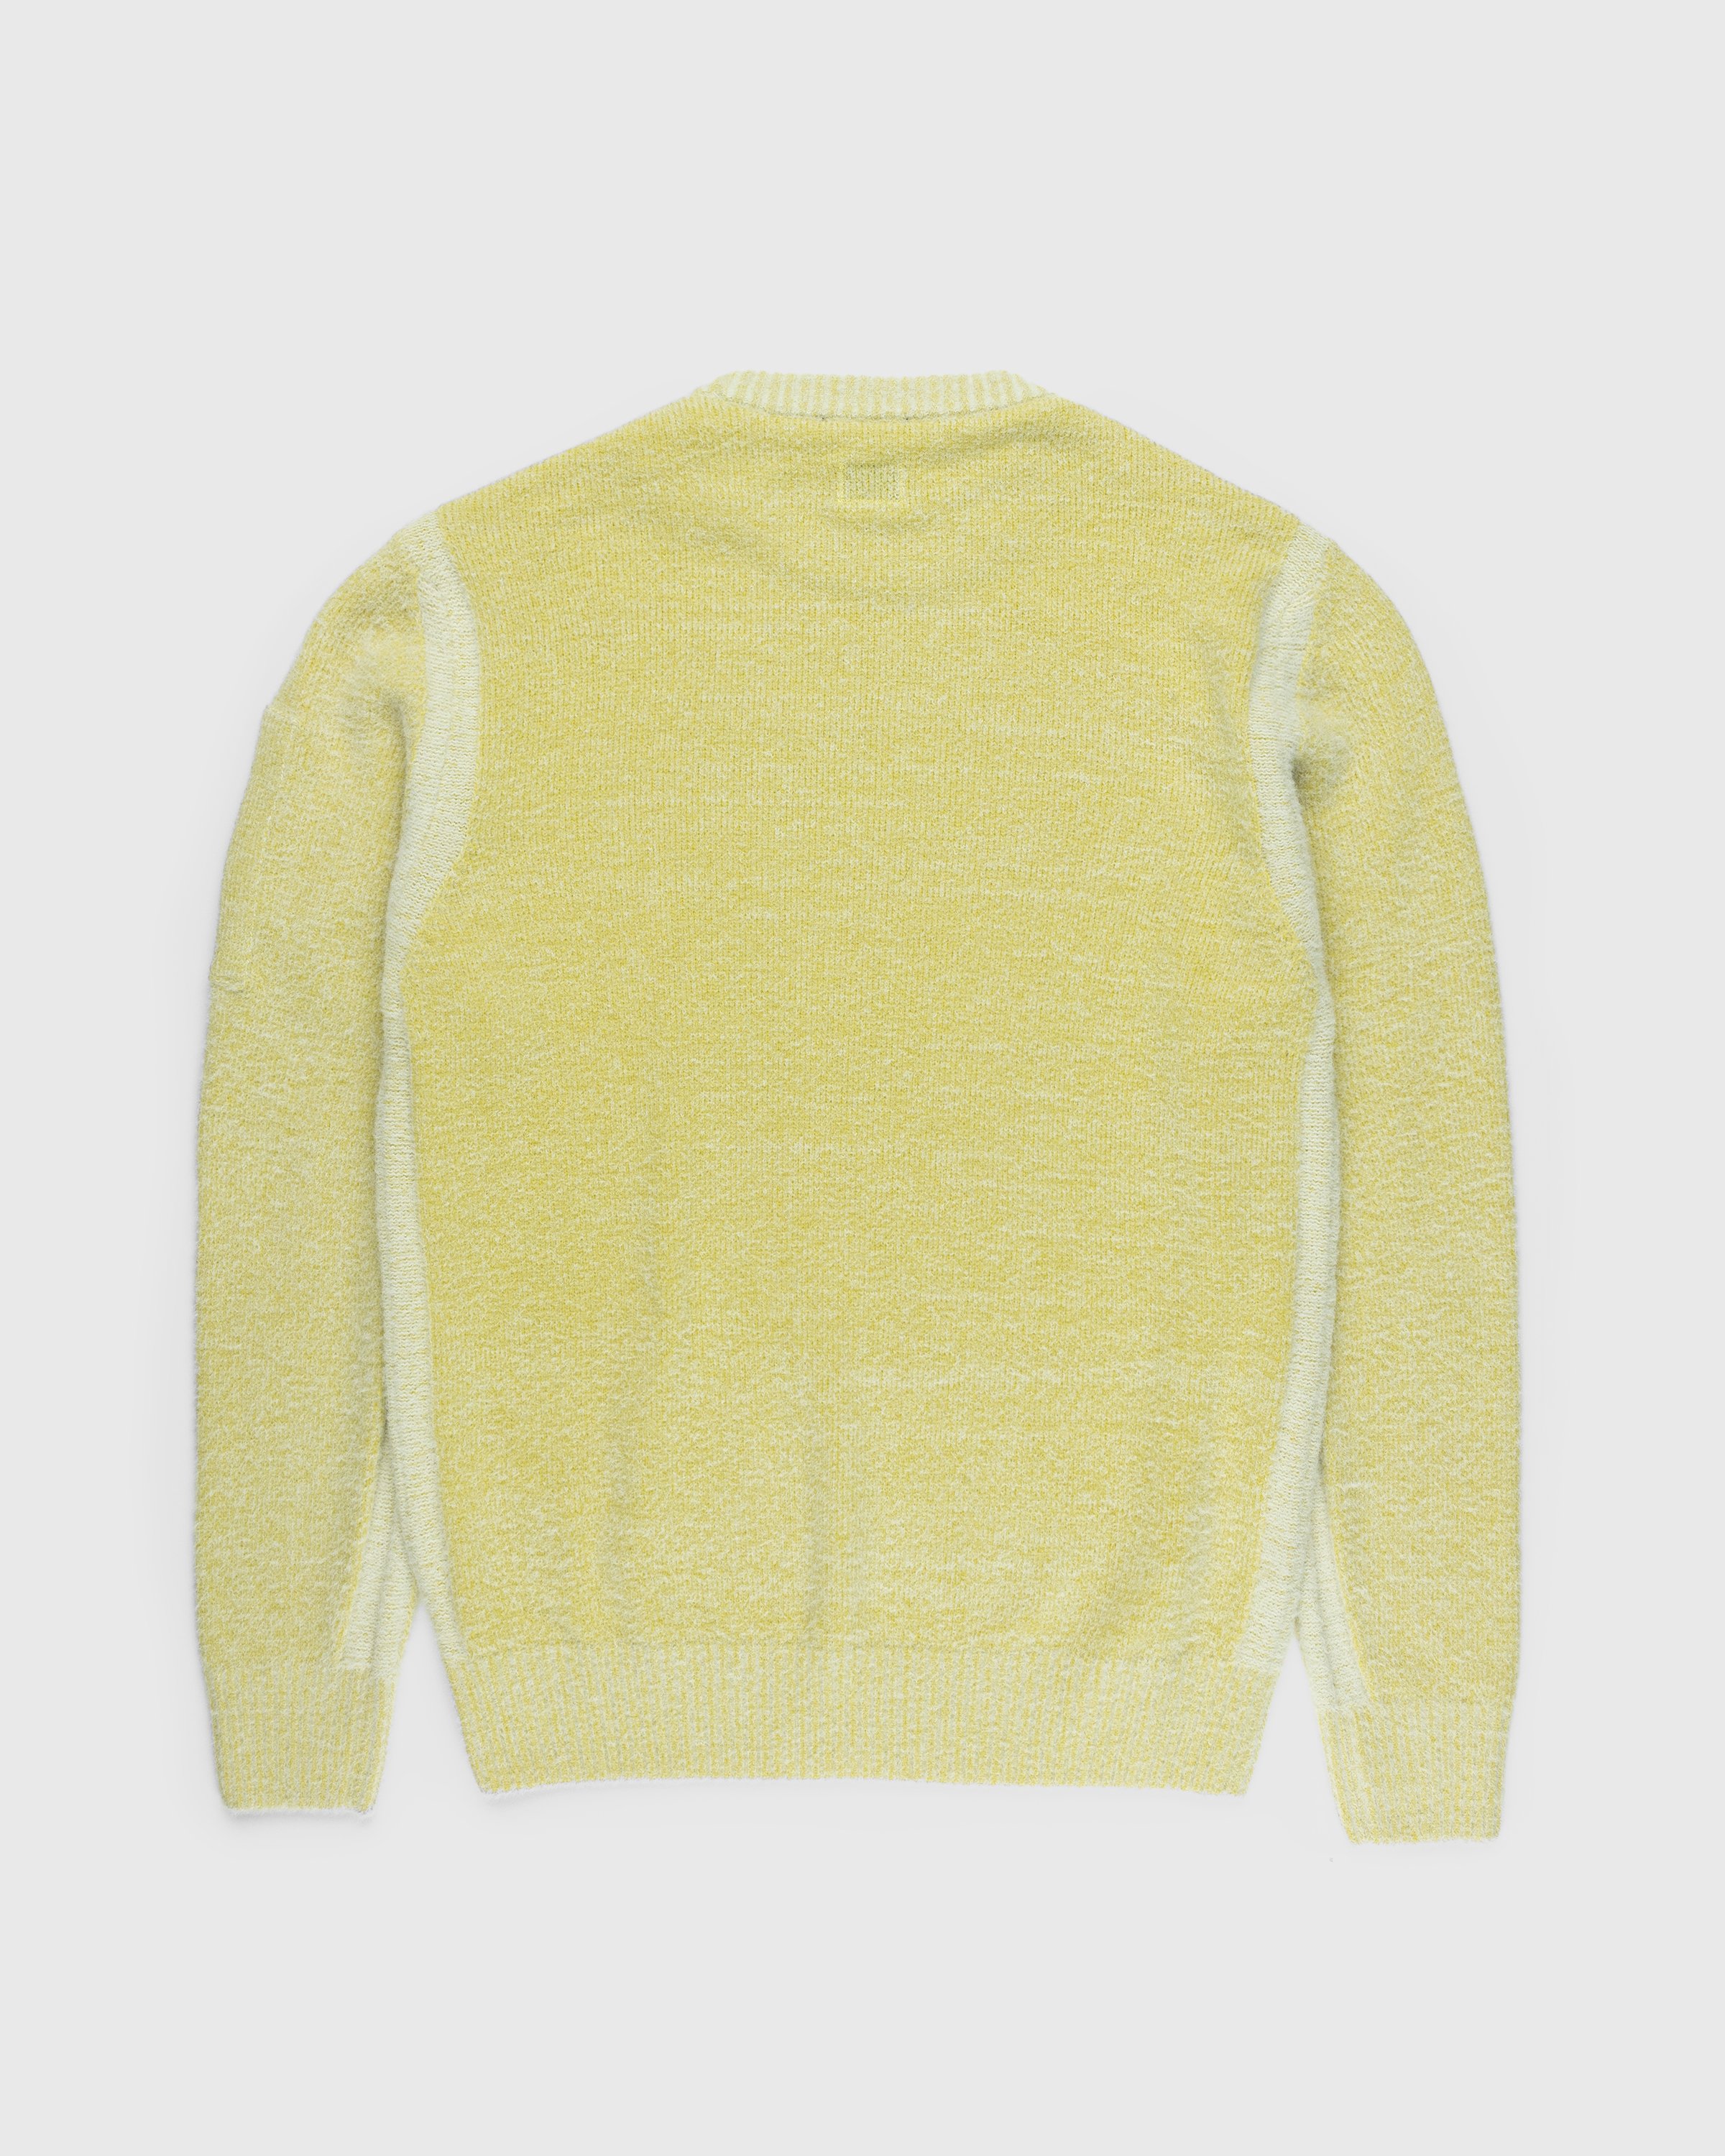 C.P. Company - Fleece Knit Jumper Yellow - Clothing - Yellow - Image 2